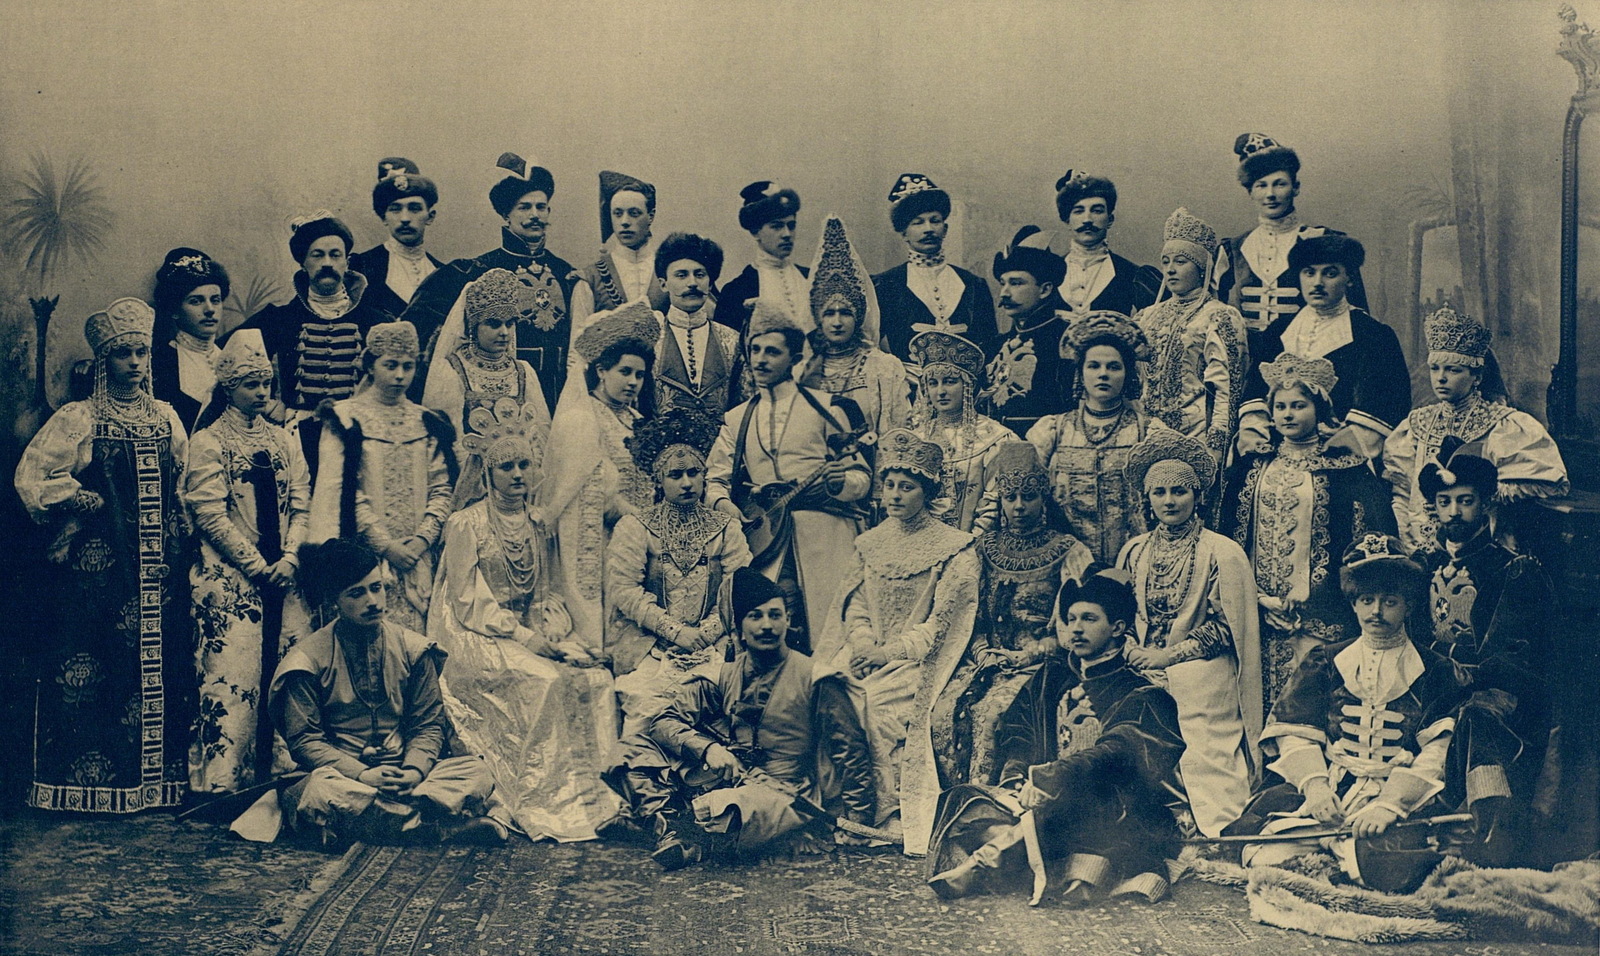 Russian court fashion - My, Российская империя, 19th century, Romanovs, Fashion history, Monarchy, Longpost